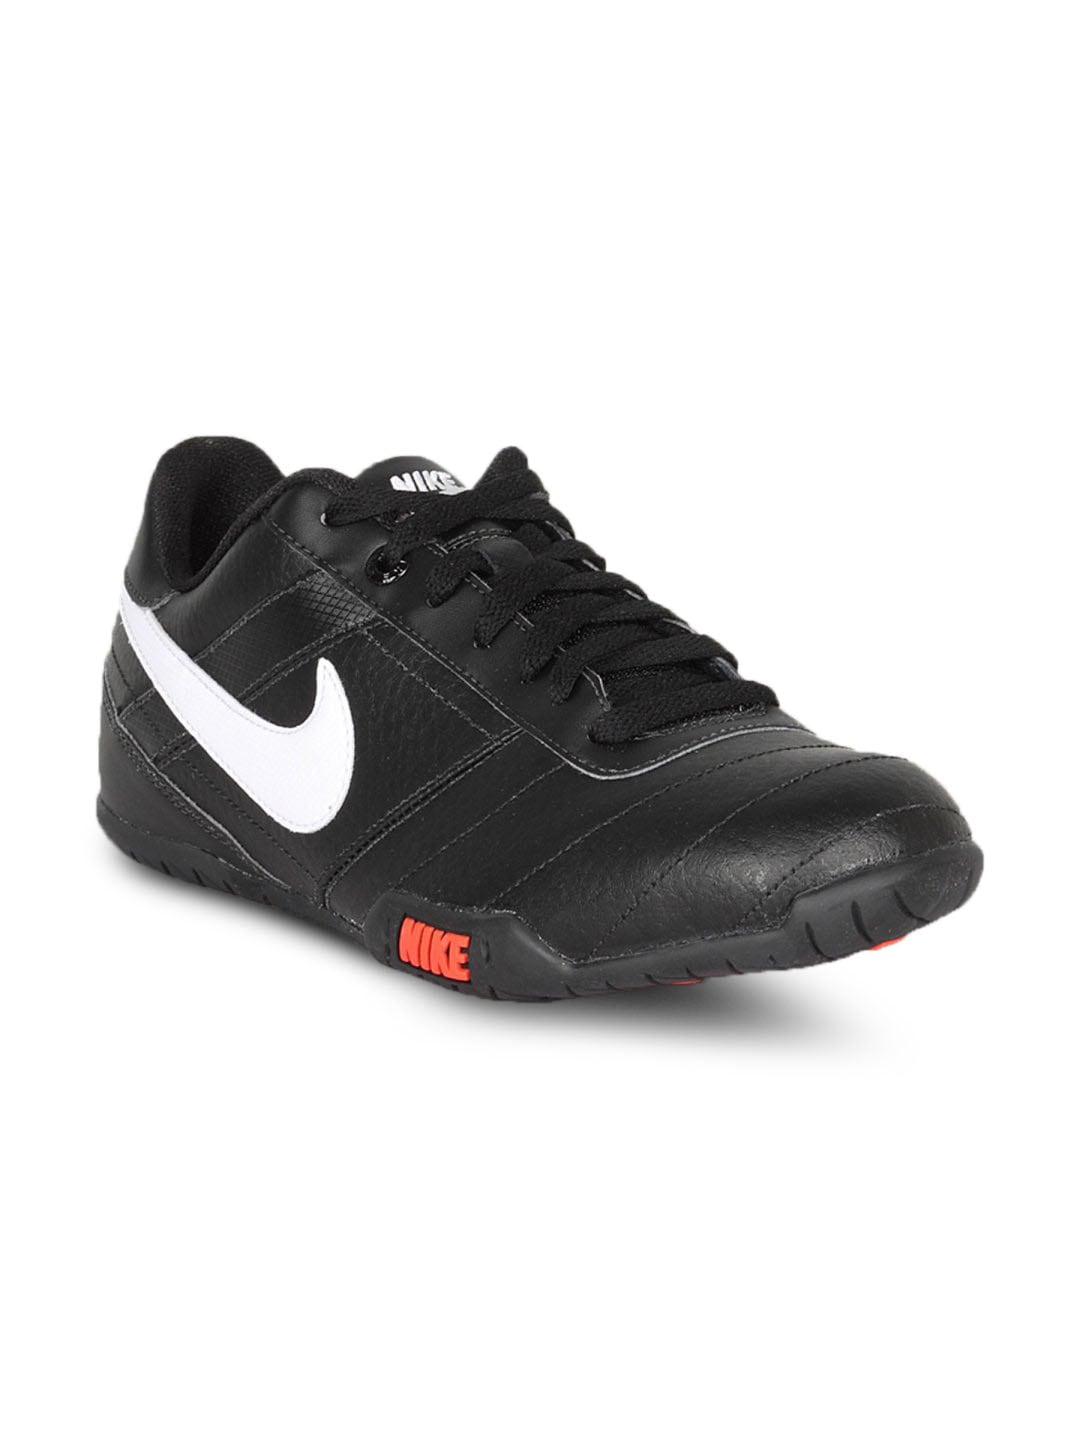 Nike Men's Street Pana II Black White Shoe